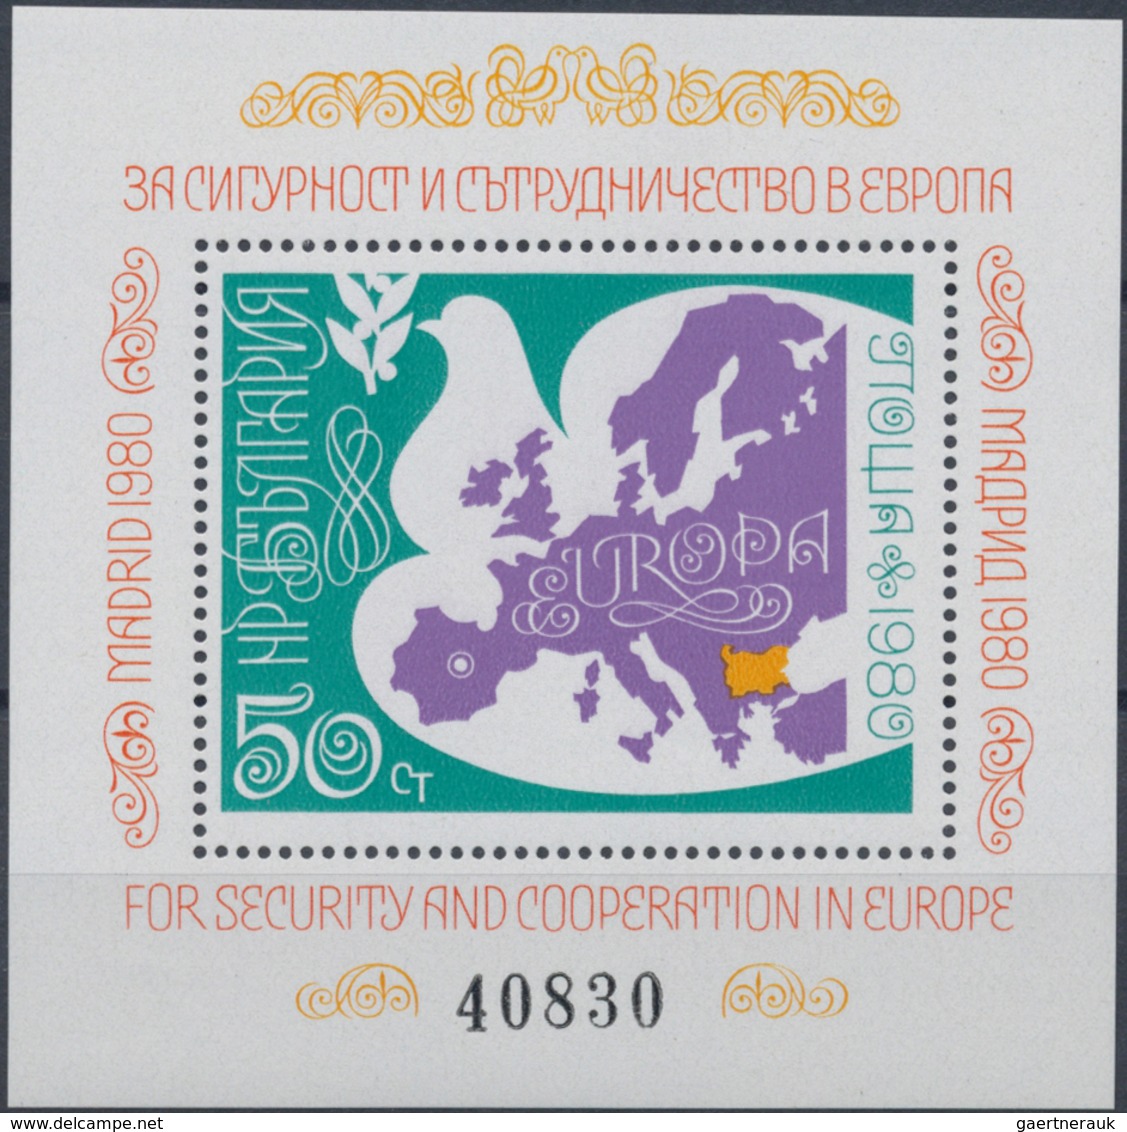 Bulgarien: 1979, Interkosmos, 200 copies of the imperforated souvenir sheet MNH. Michel bl. no. 87,